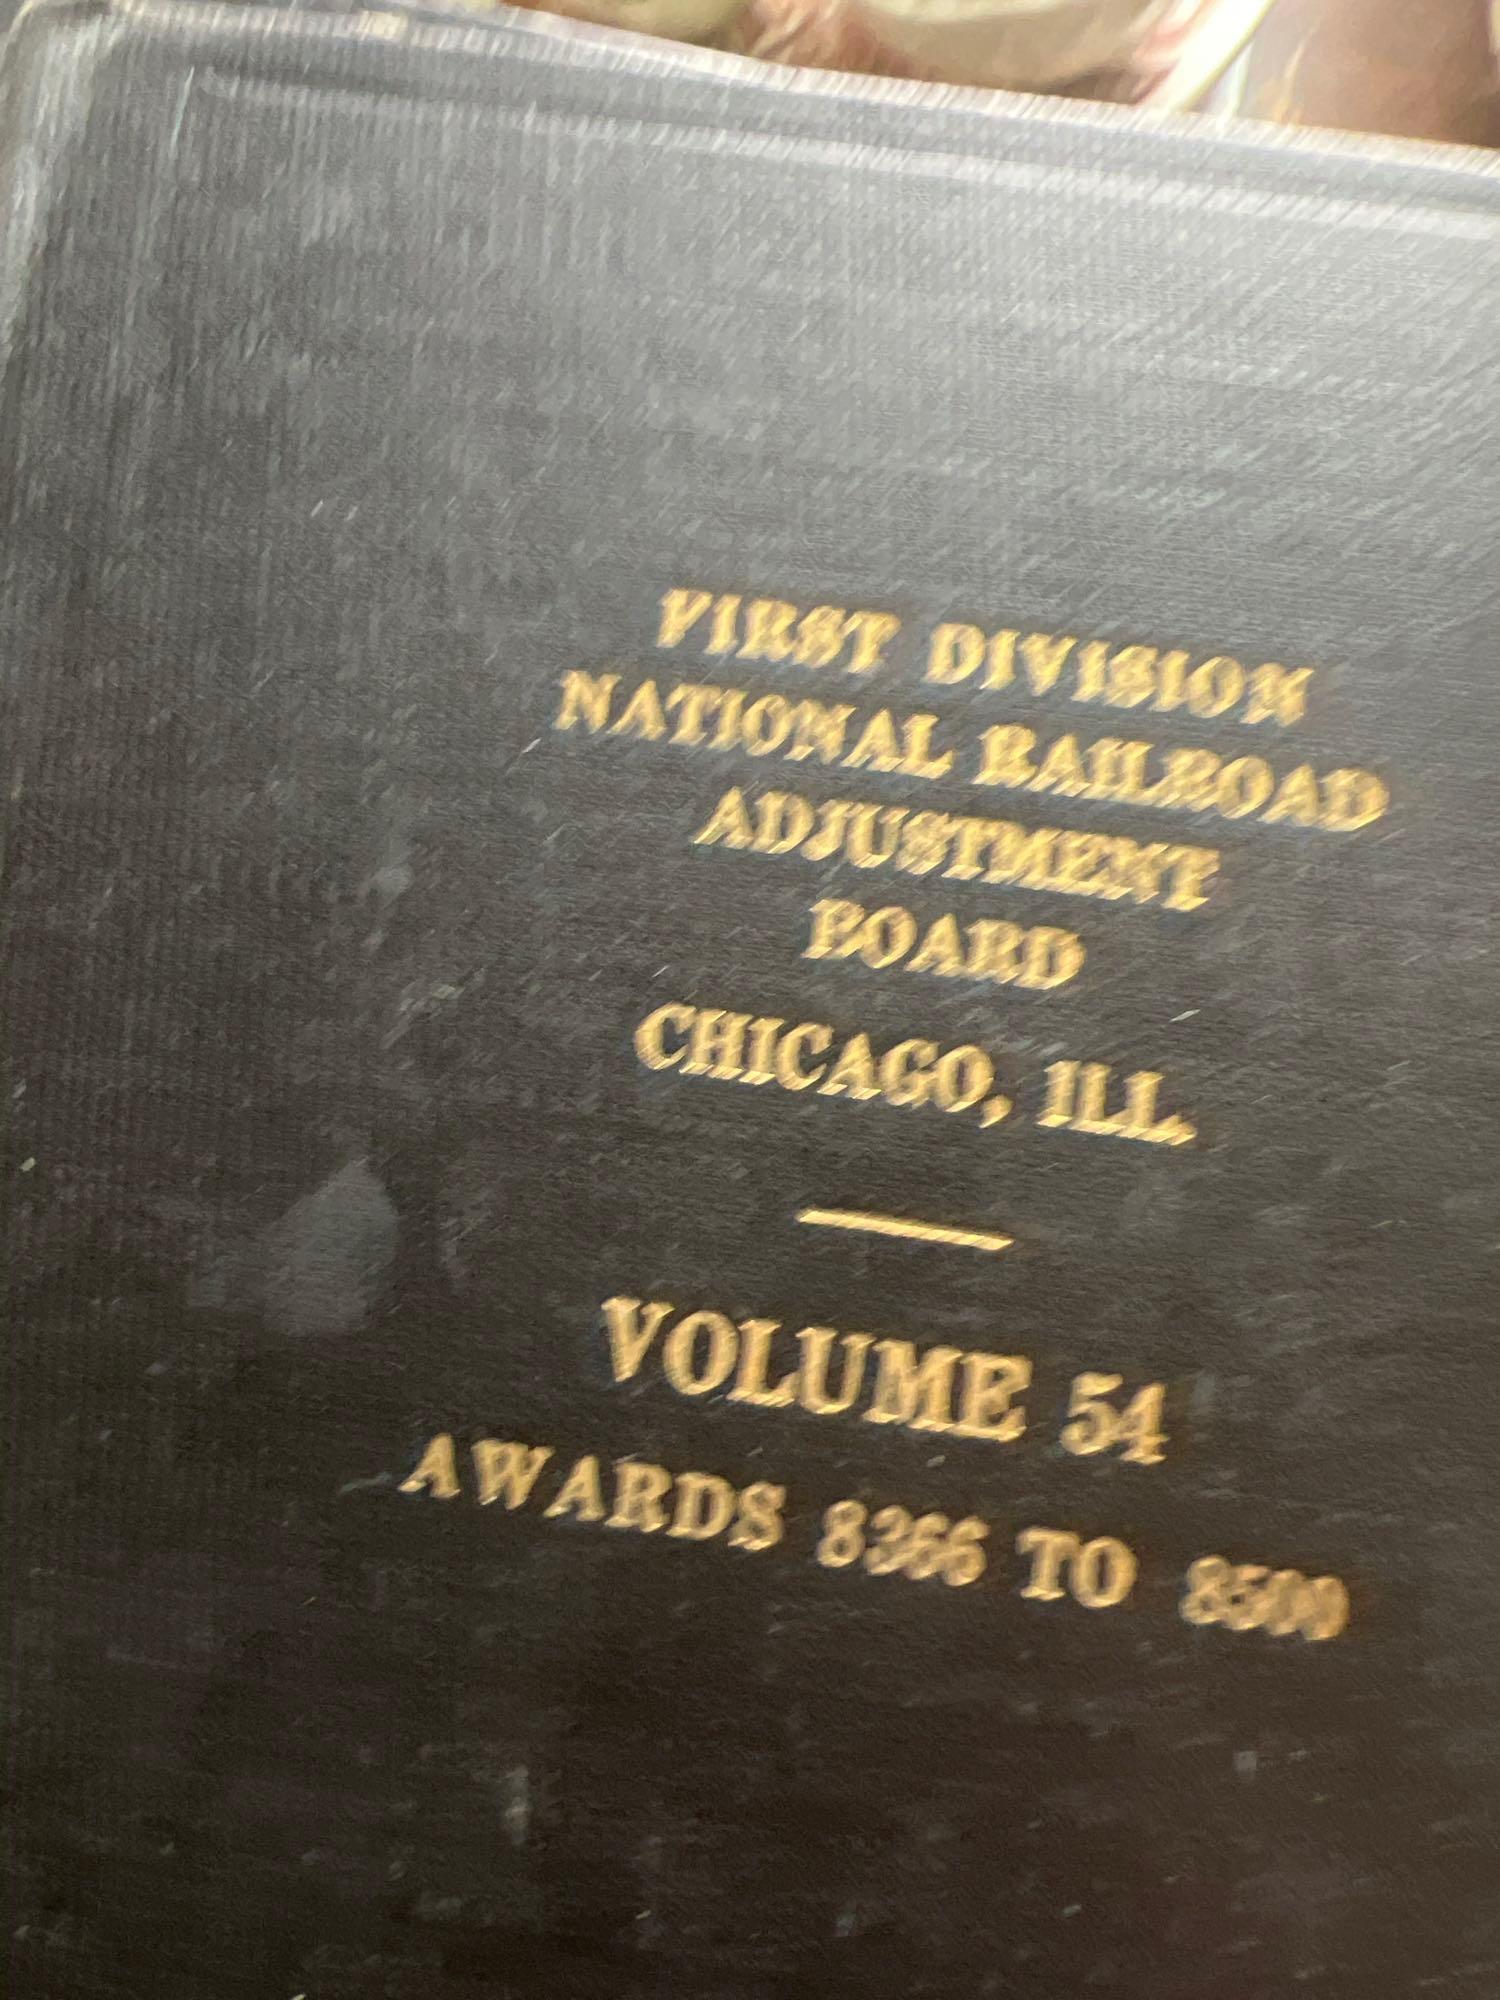 five vintage railroad books